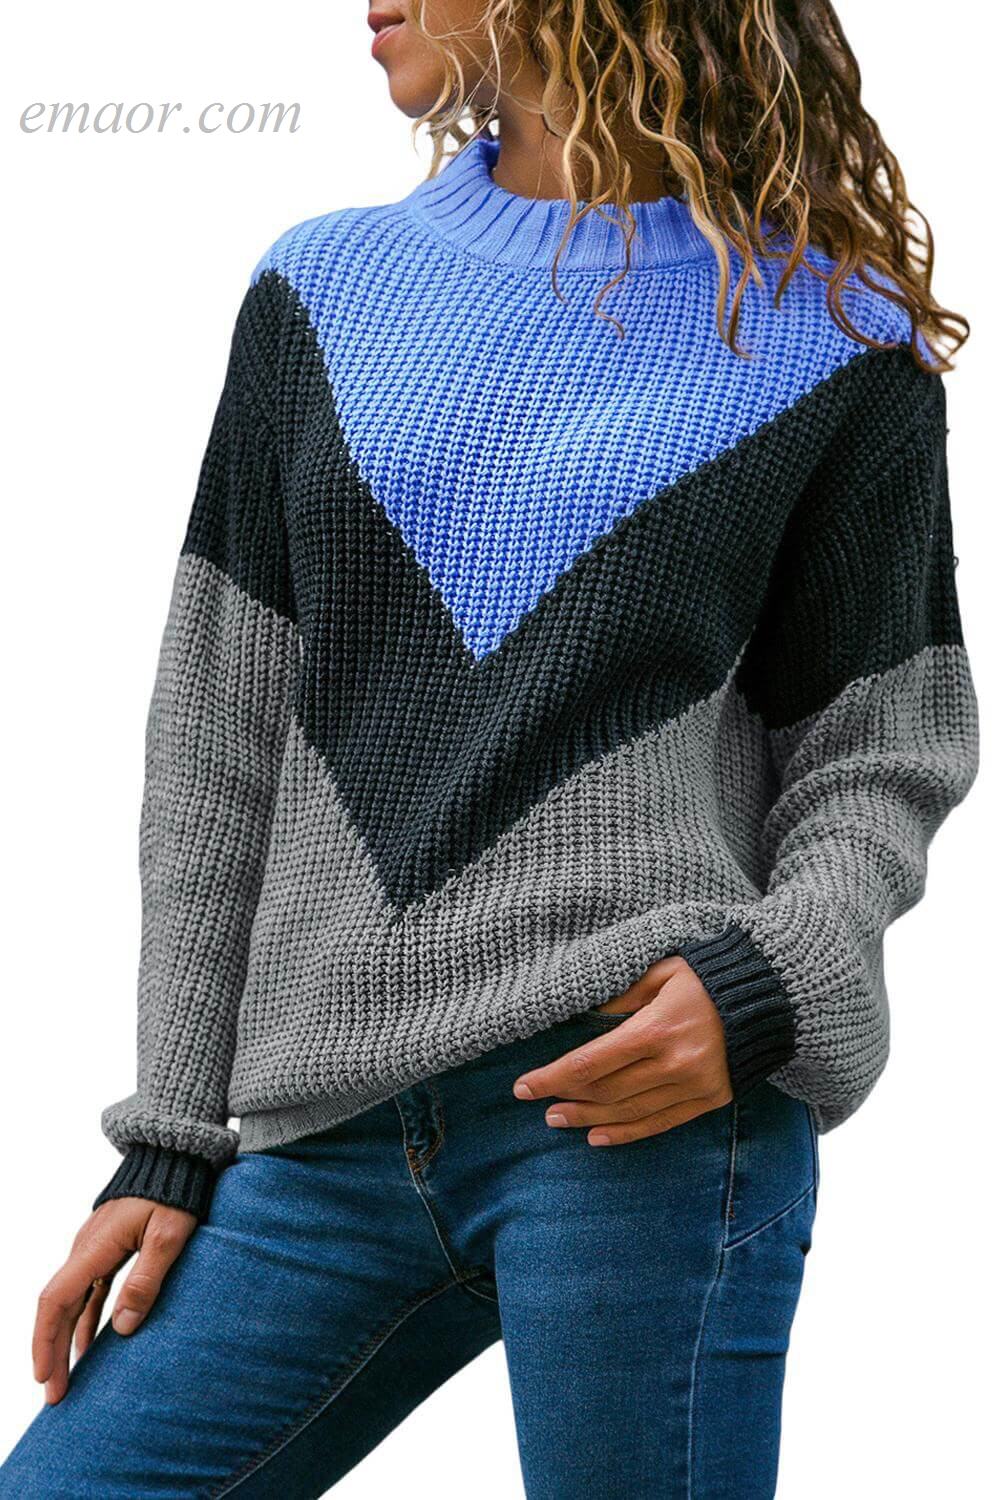 Outerwear Best Factory Chevron Accent Blue Grey Sweater School Uniform Outerwear